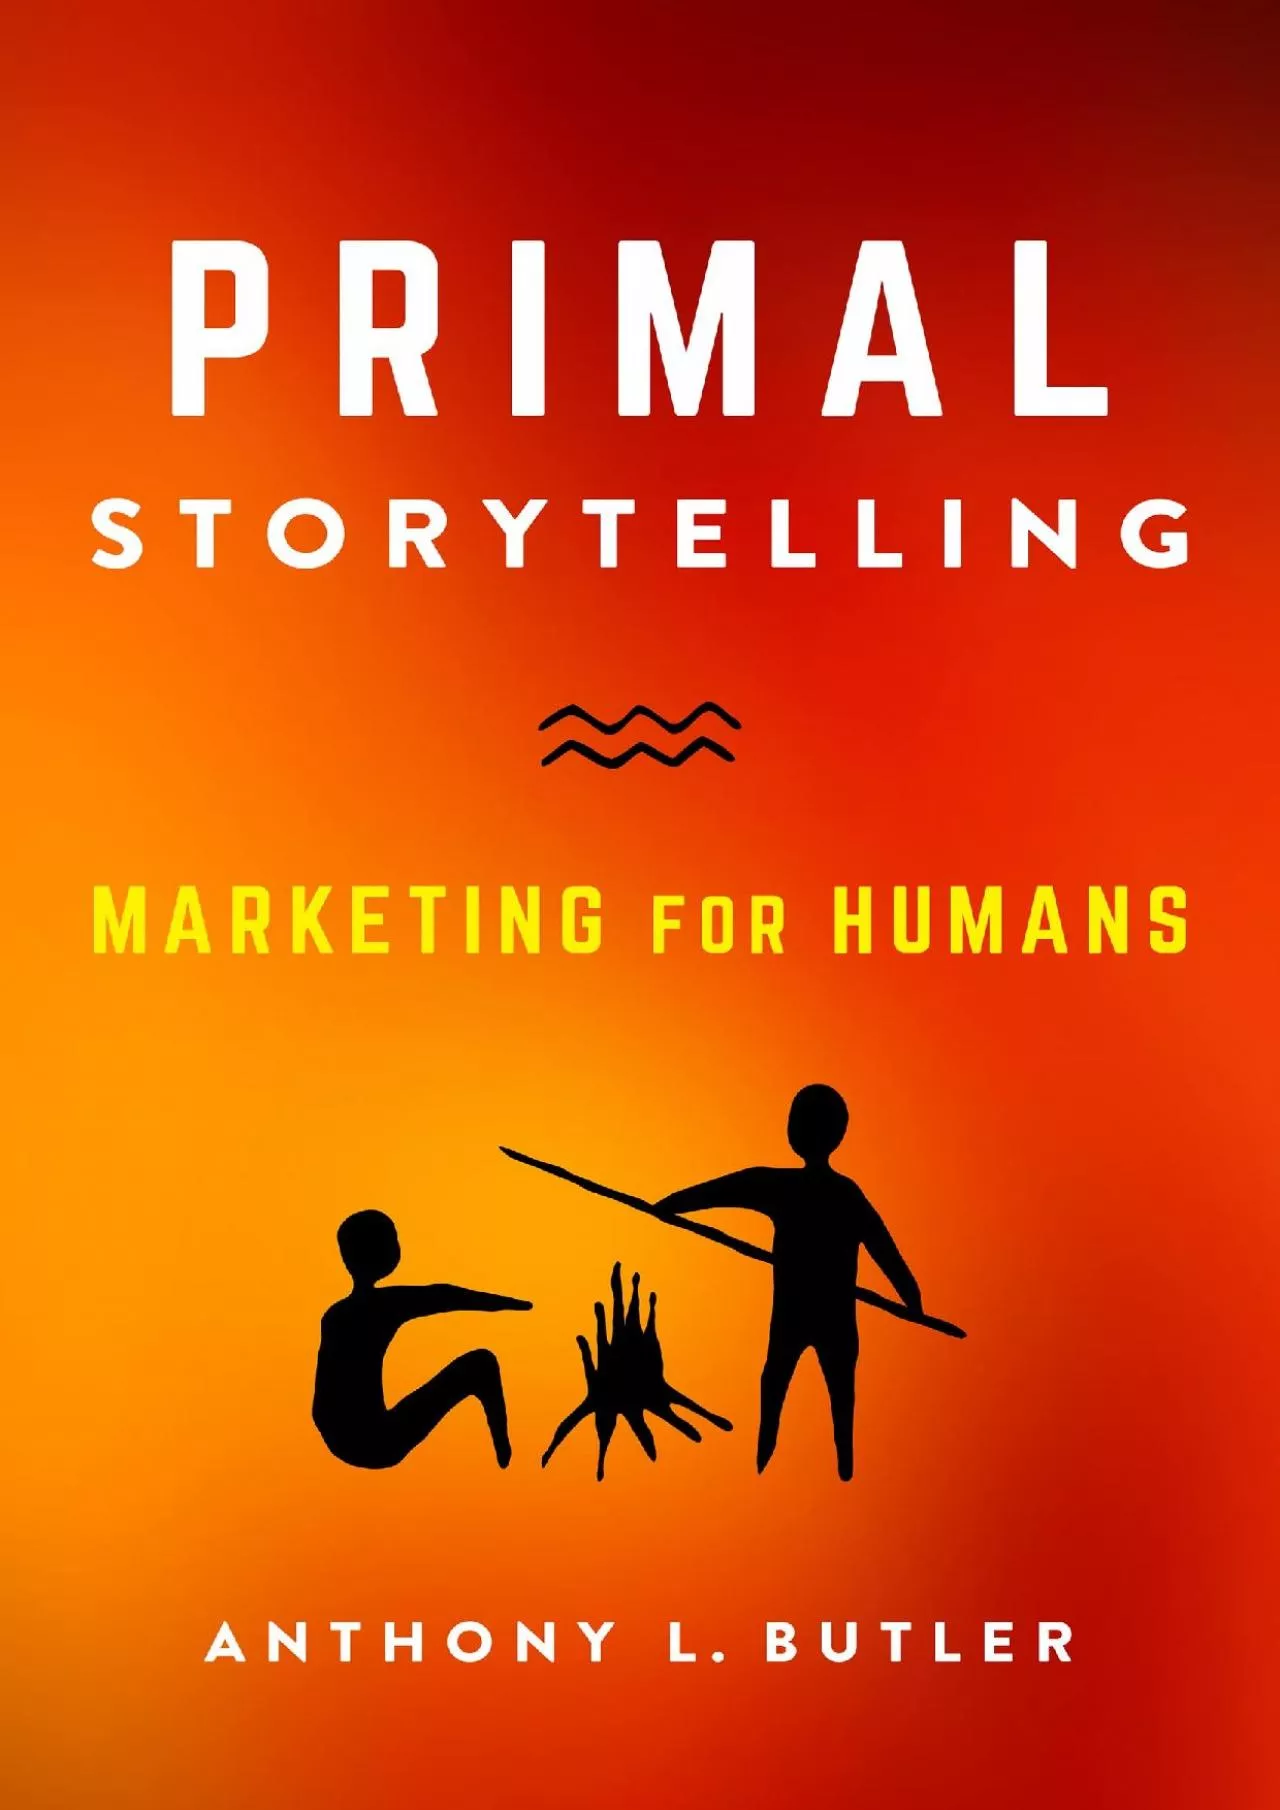 Primal Storytelling Marketing for Humans